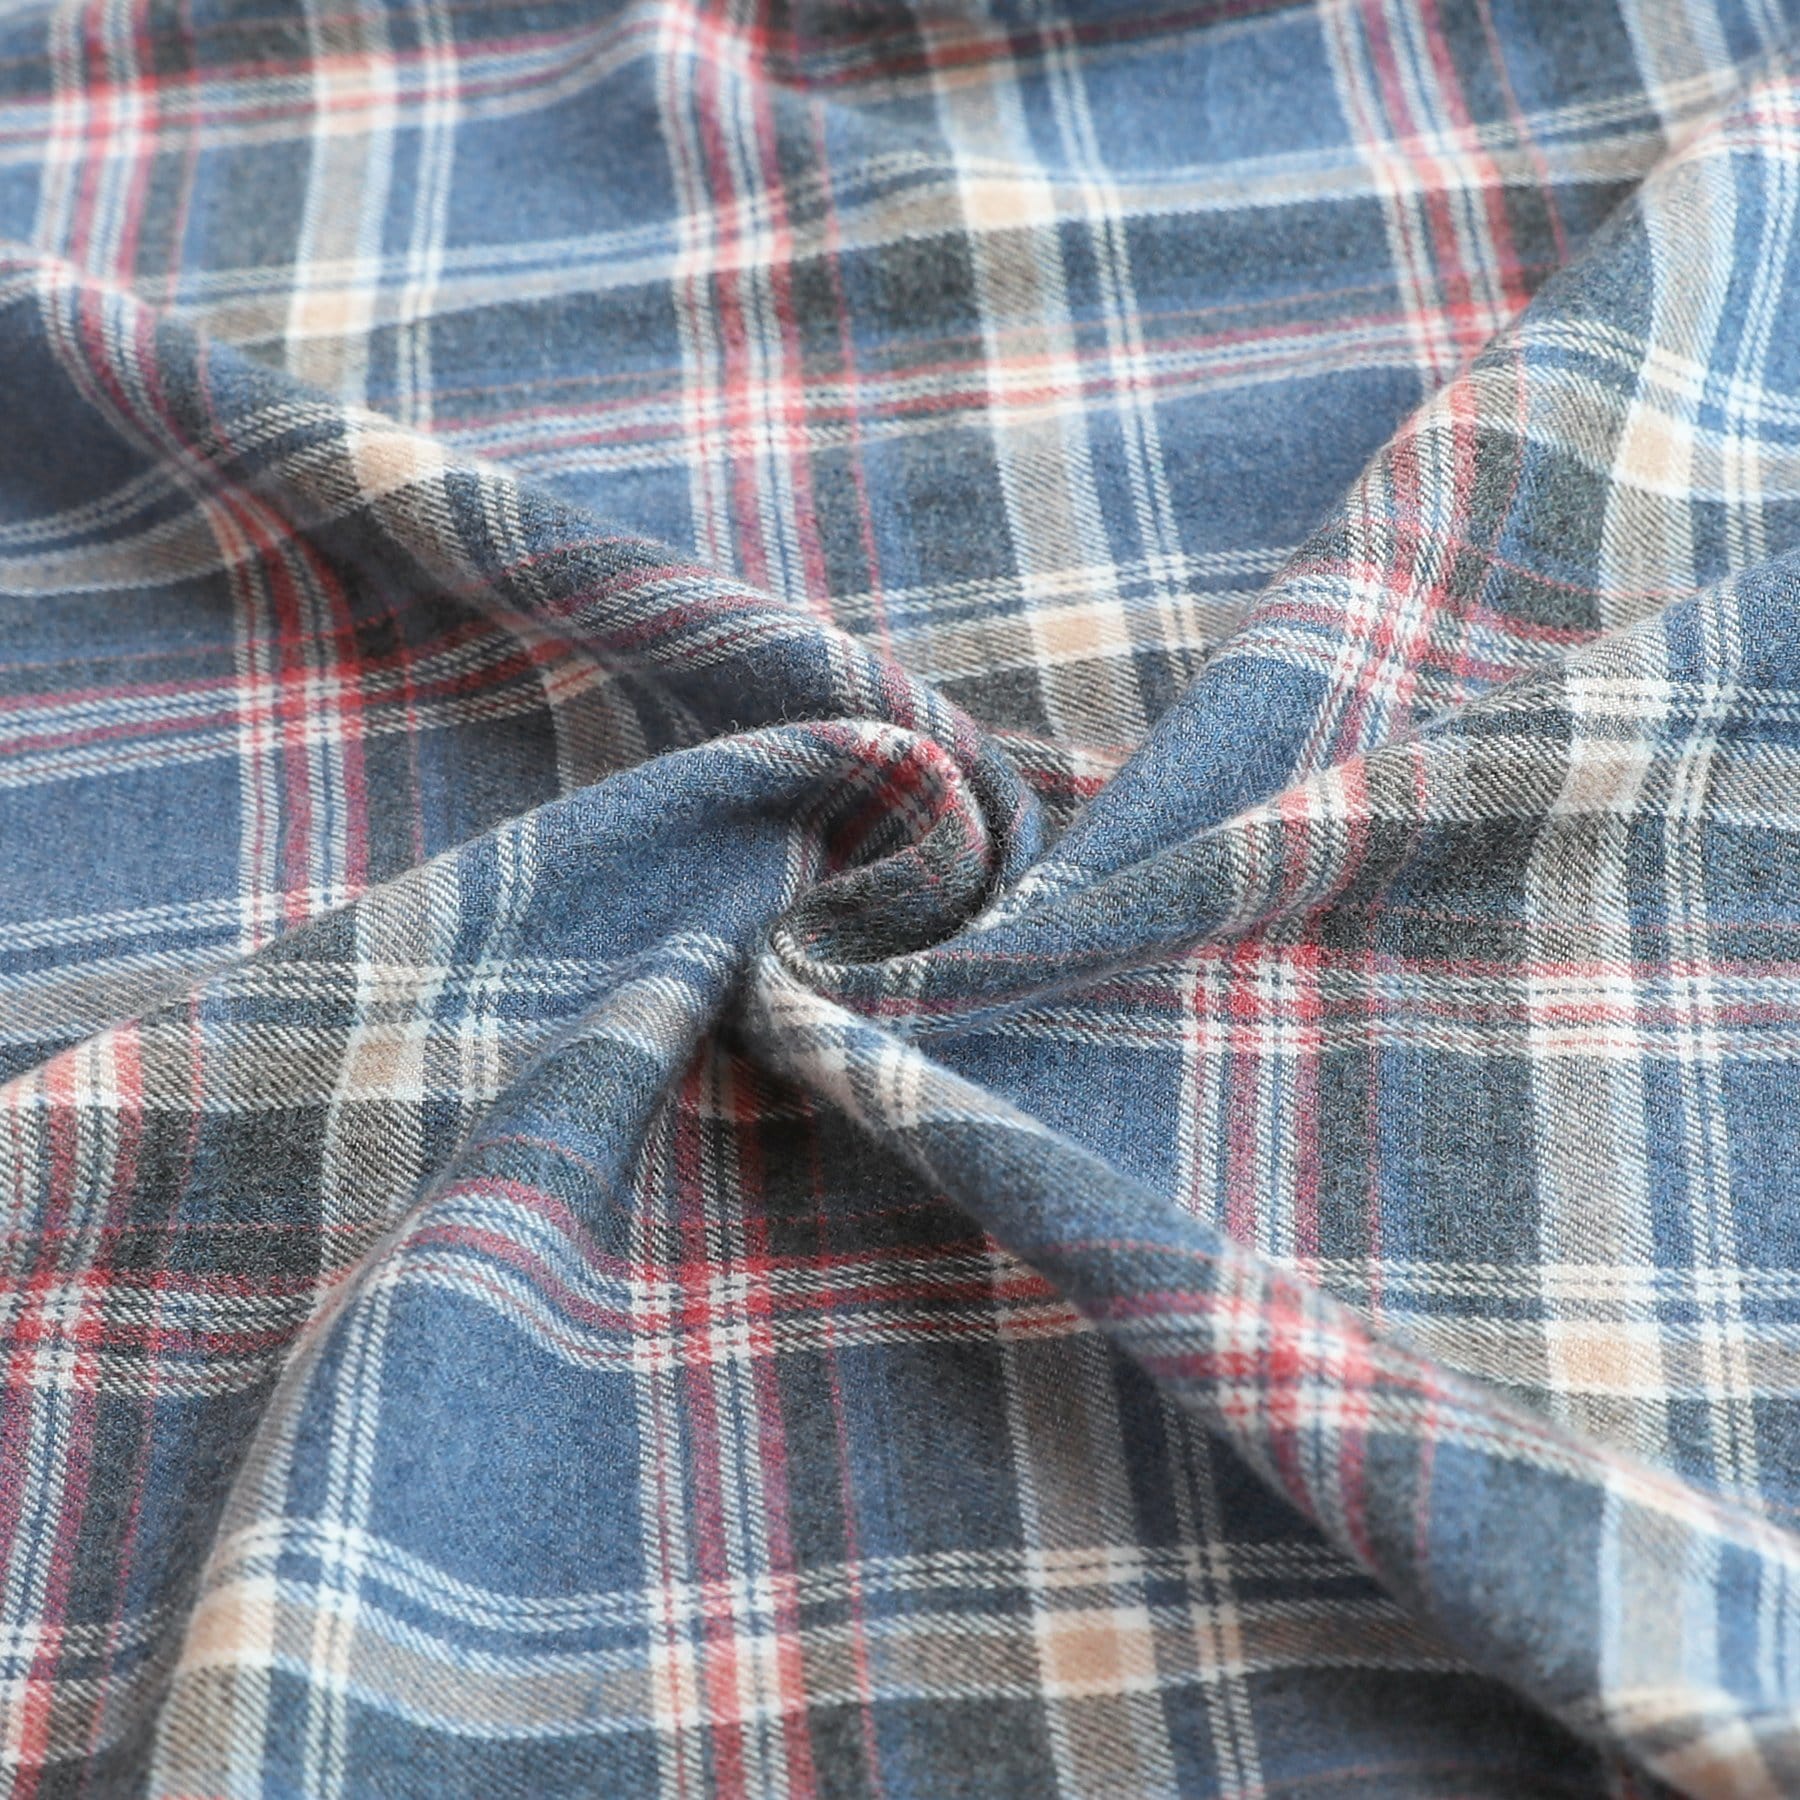 Men's Plaid Flannel Long Sleeve Shirts #0329